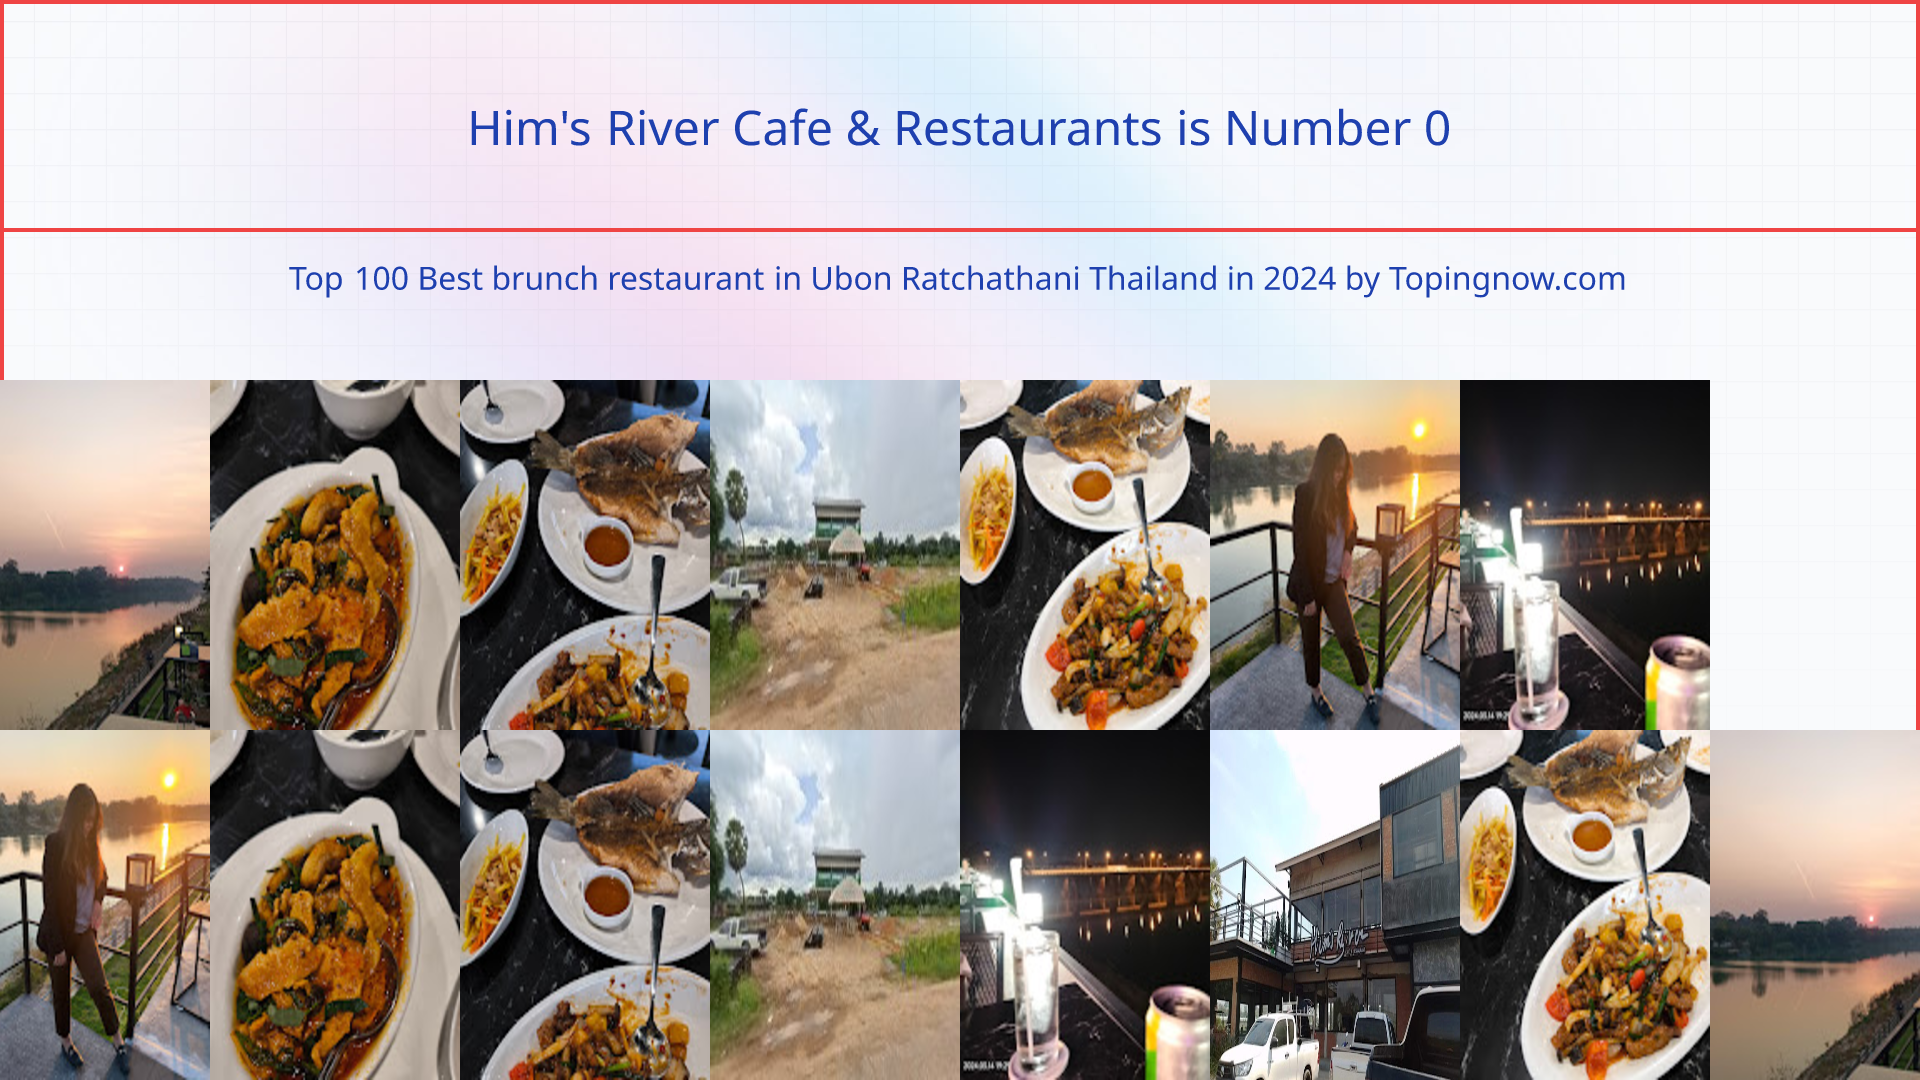 Him's River Cafe & Restaurants: Top 100 Best brunch restaurant in Ubon Ratchathani Thailand in 2024